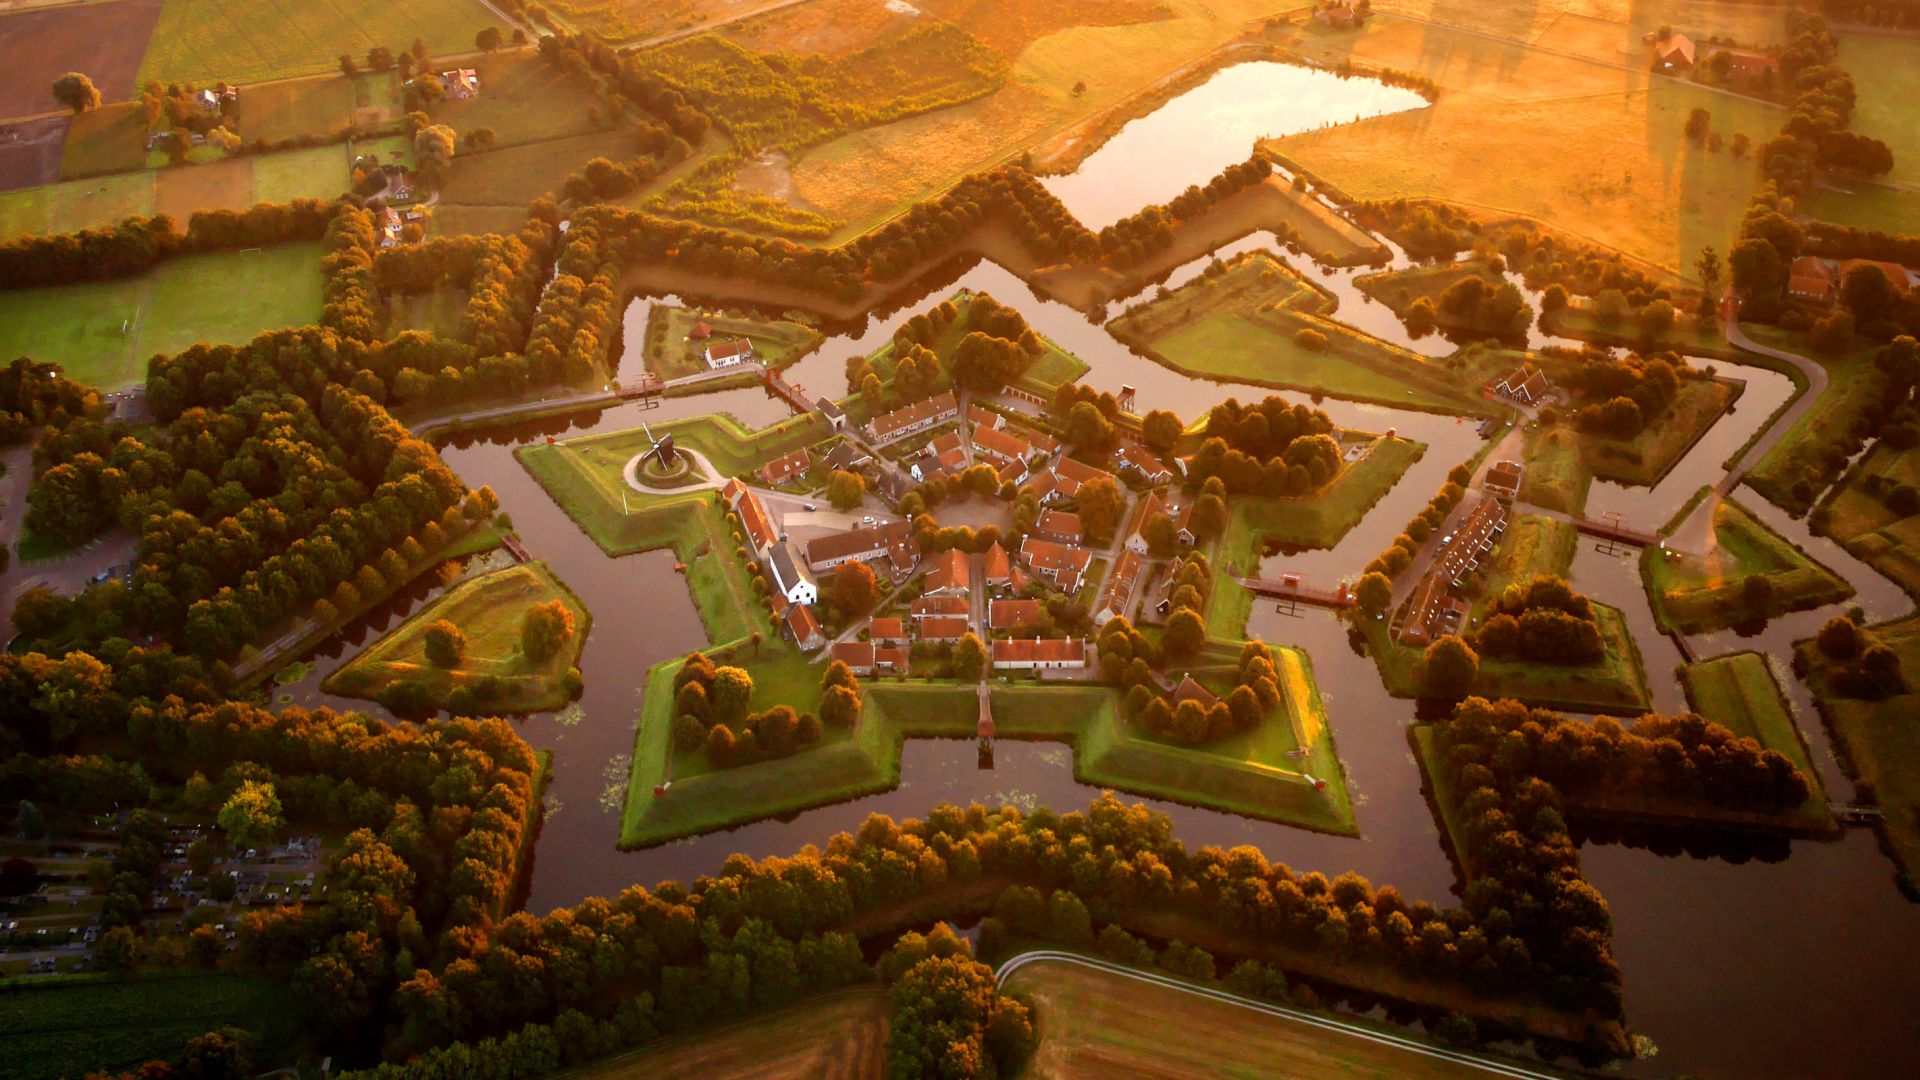 Звездная крепость Буртанж, Нидерланды, Туризм, Путешествие, Bourtange, Nederland, Tourism, Travel (horizontal)